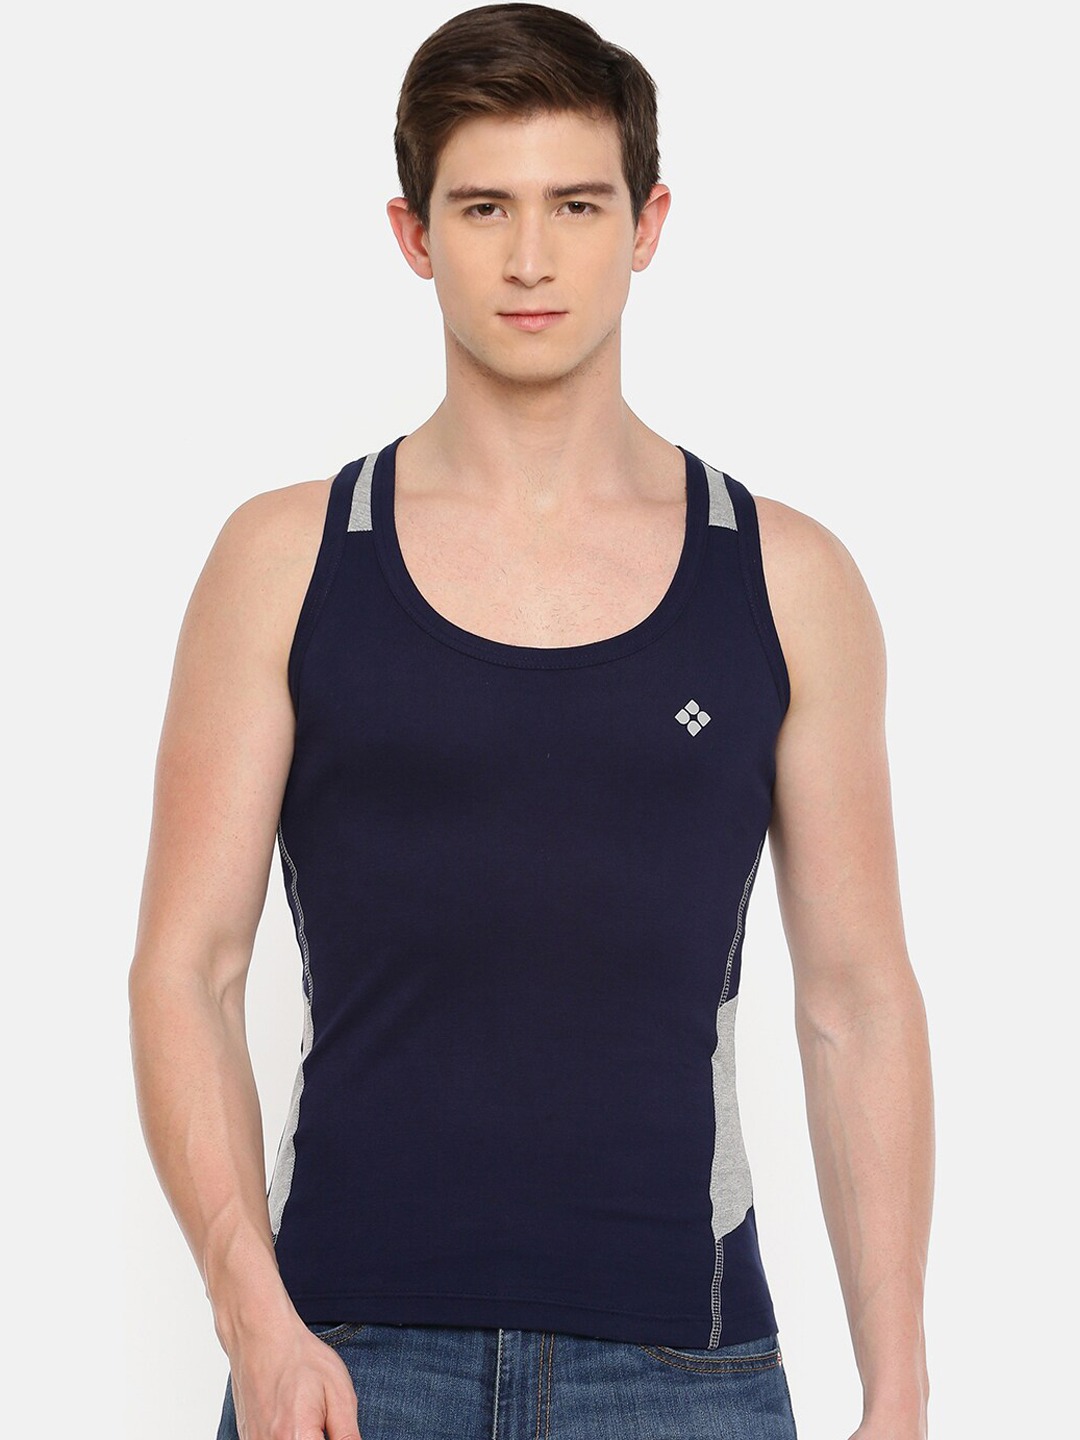 Clothing Innerwear Vests | Dollar Bigboss Men Pack Of 2 Assorted Cotton Gym Vests - KB45072